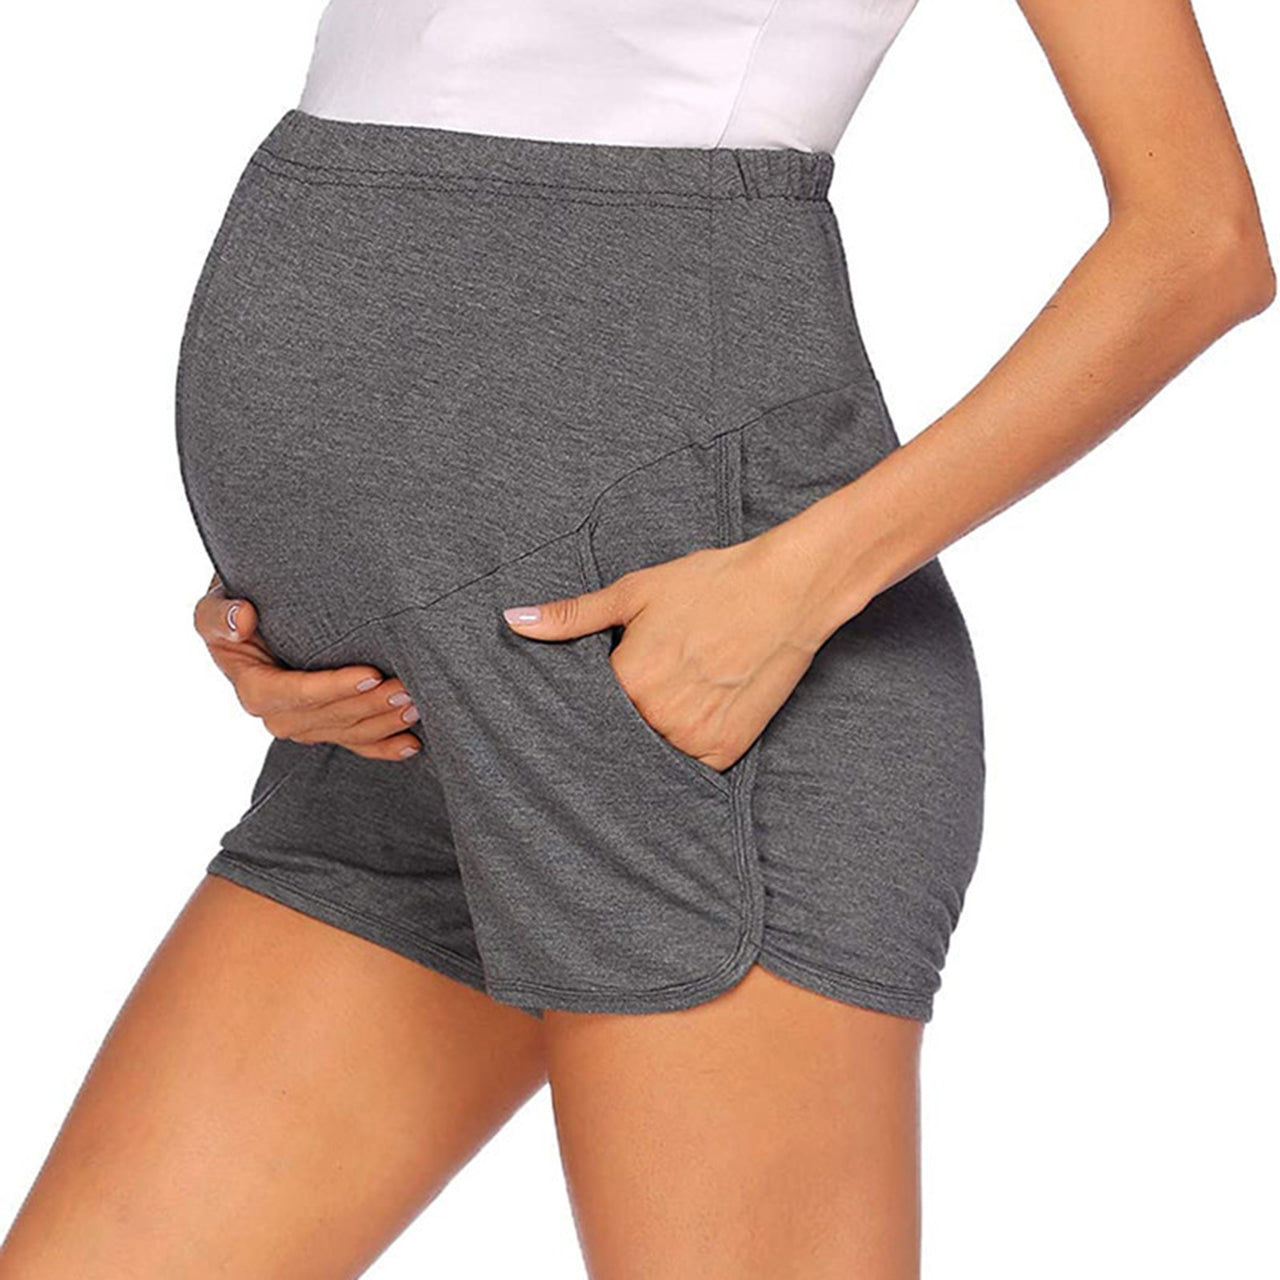 2 Colors Sports Pregnancy Maternity Pants